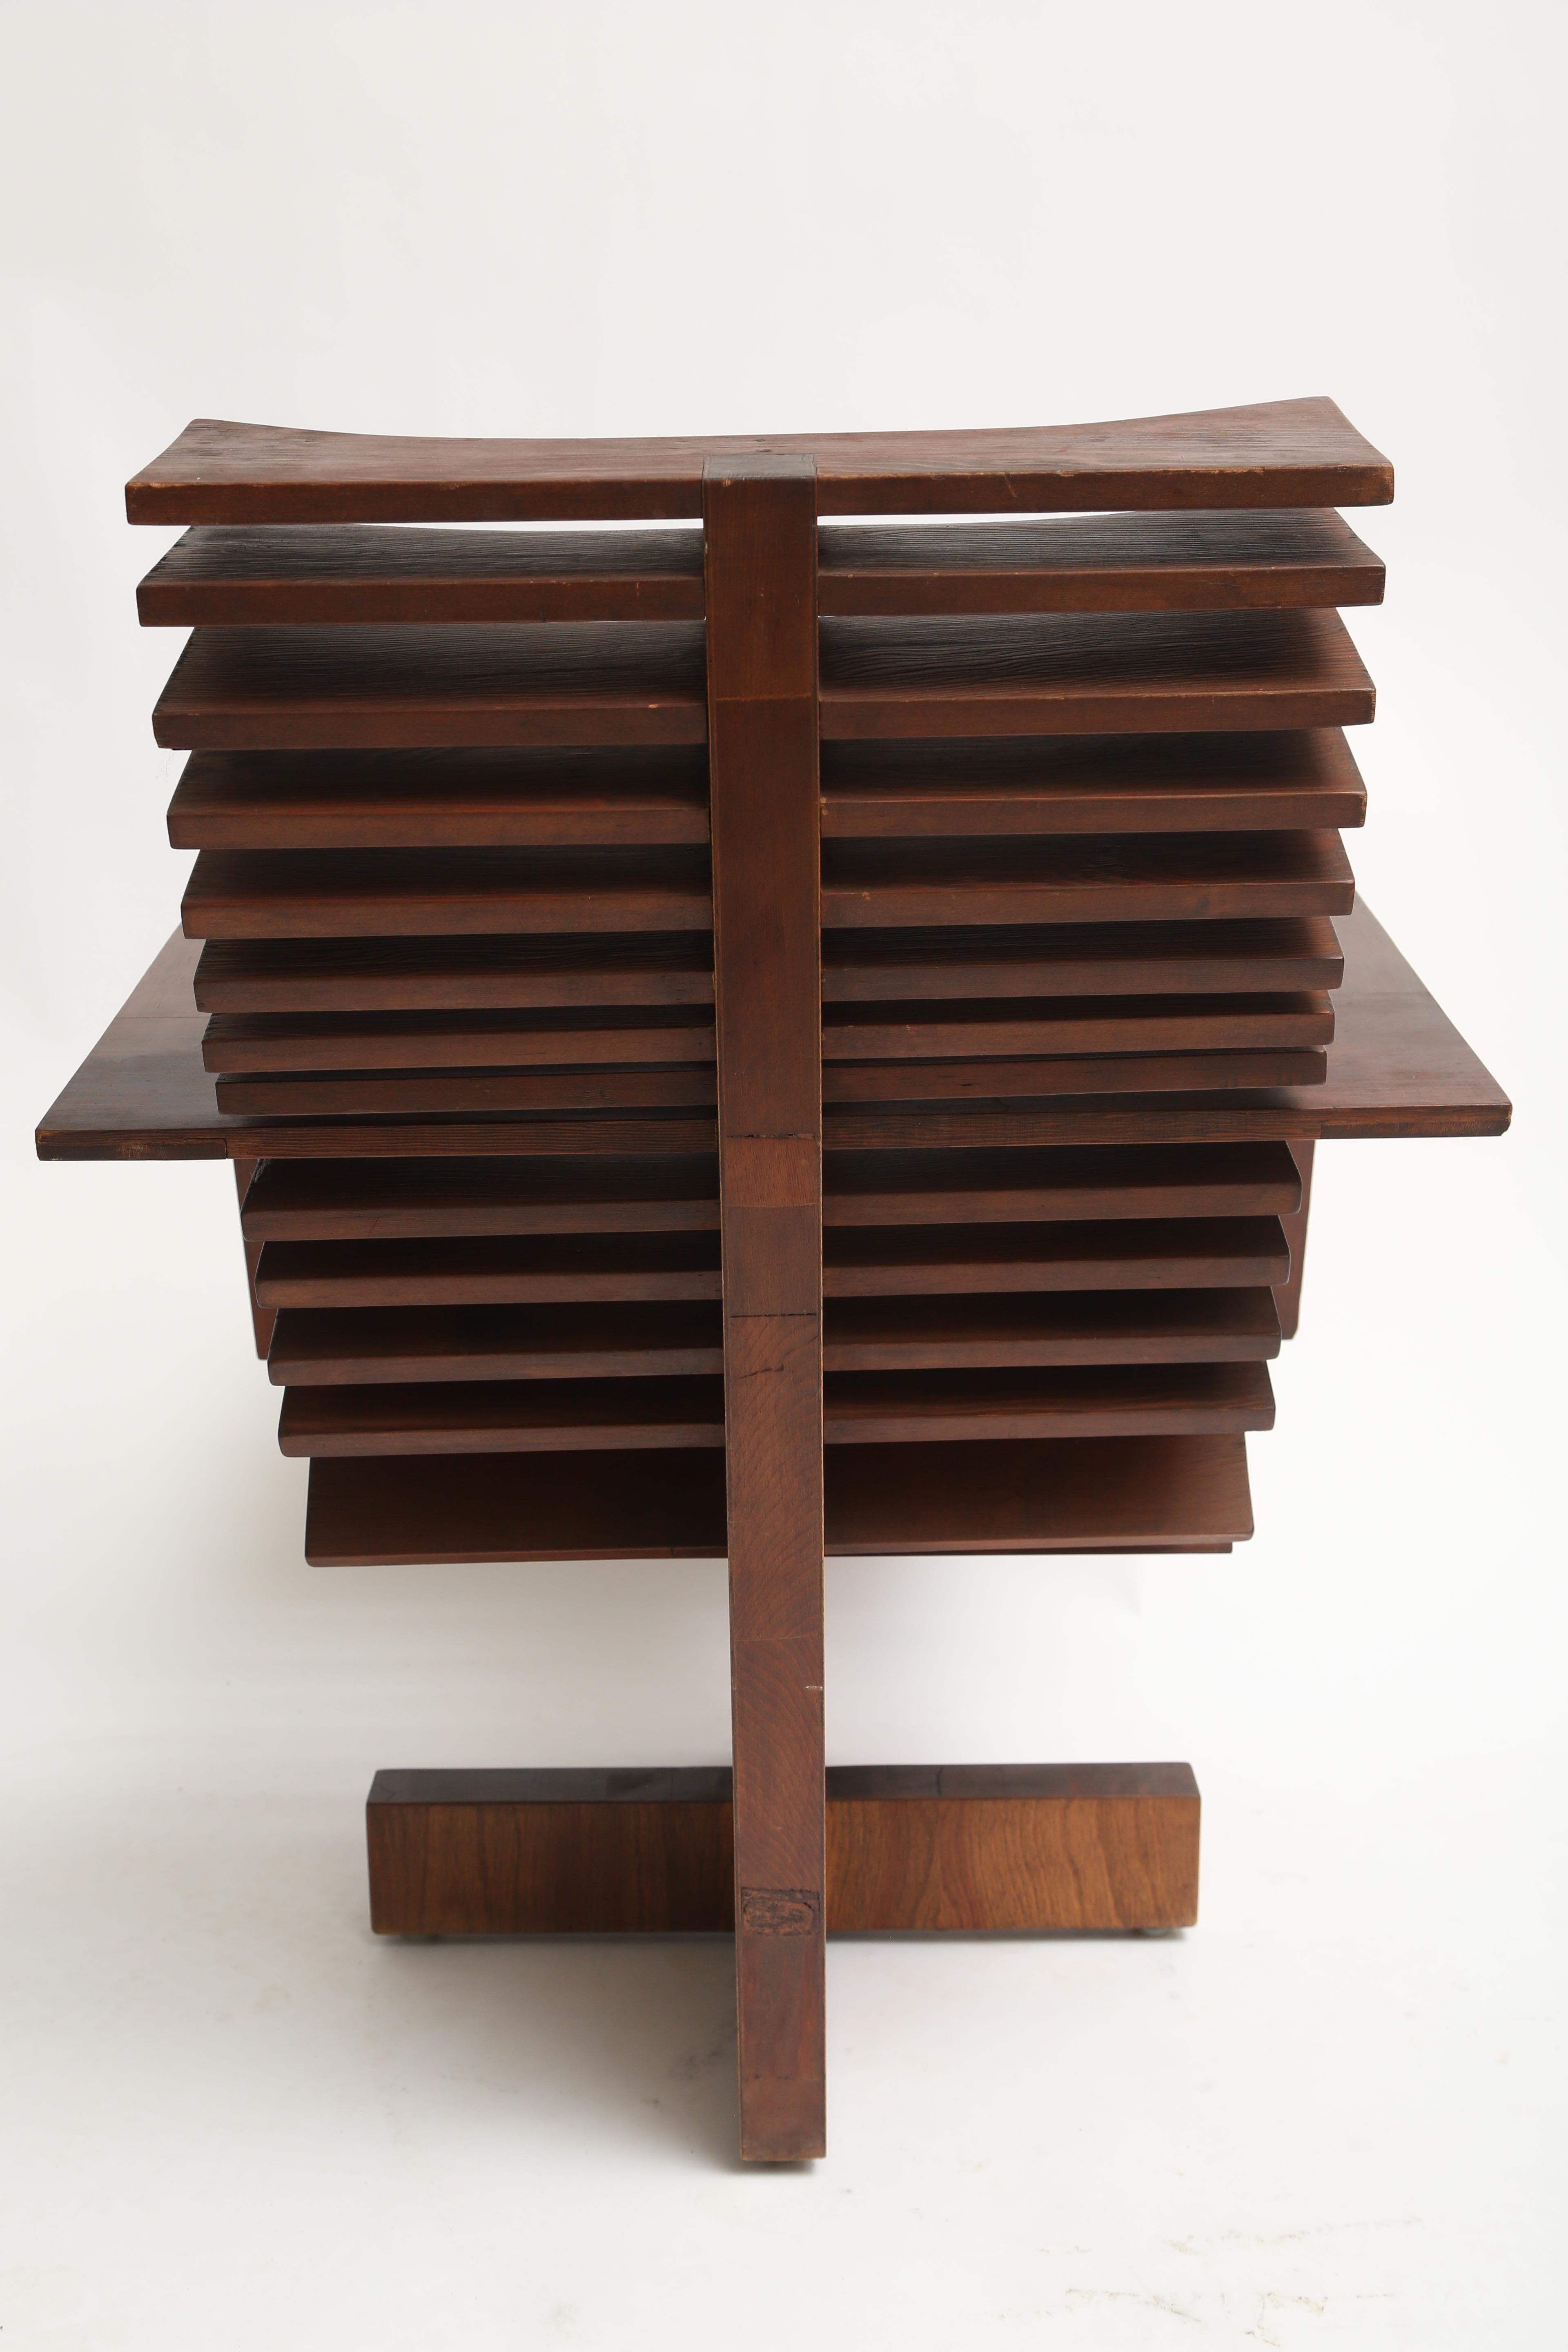 American Unique Sculptural Pine Chair For Sale